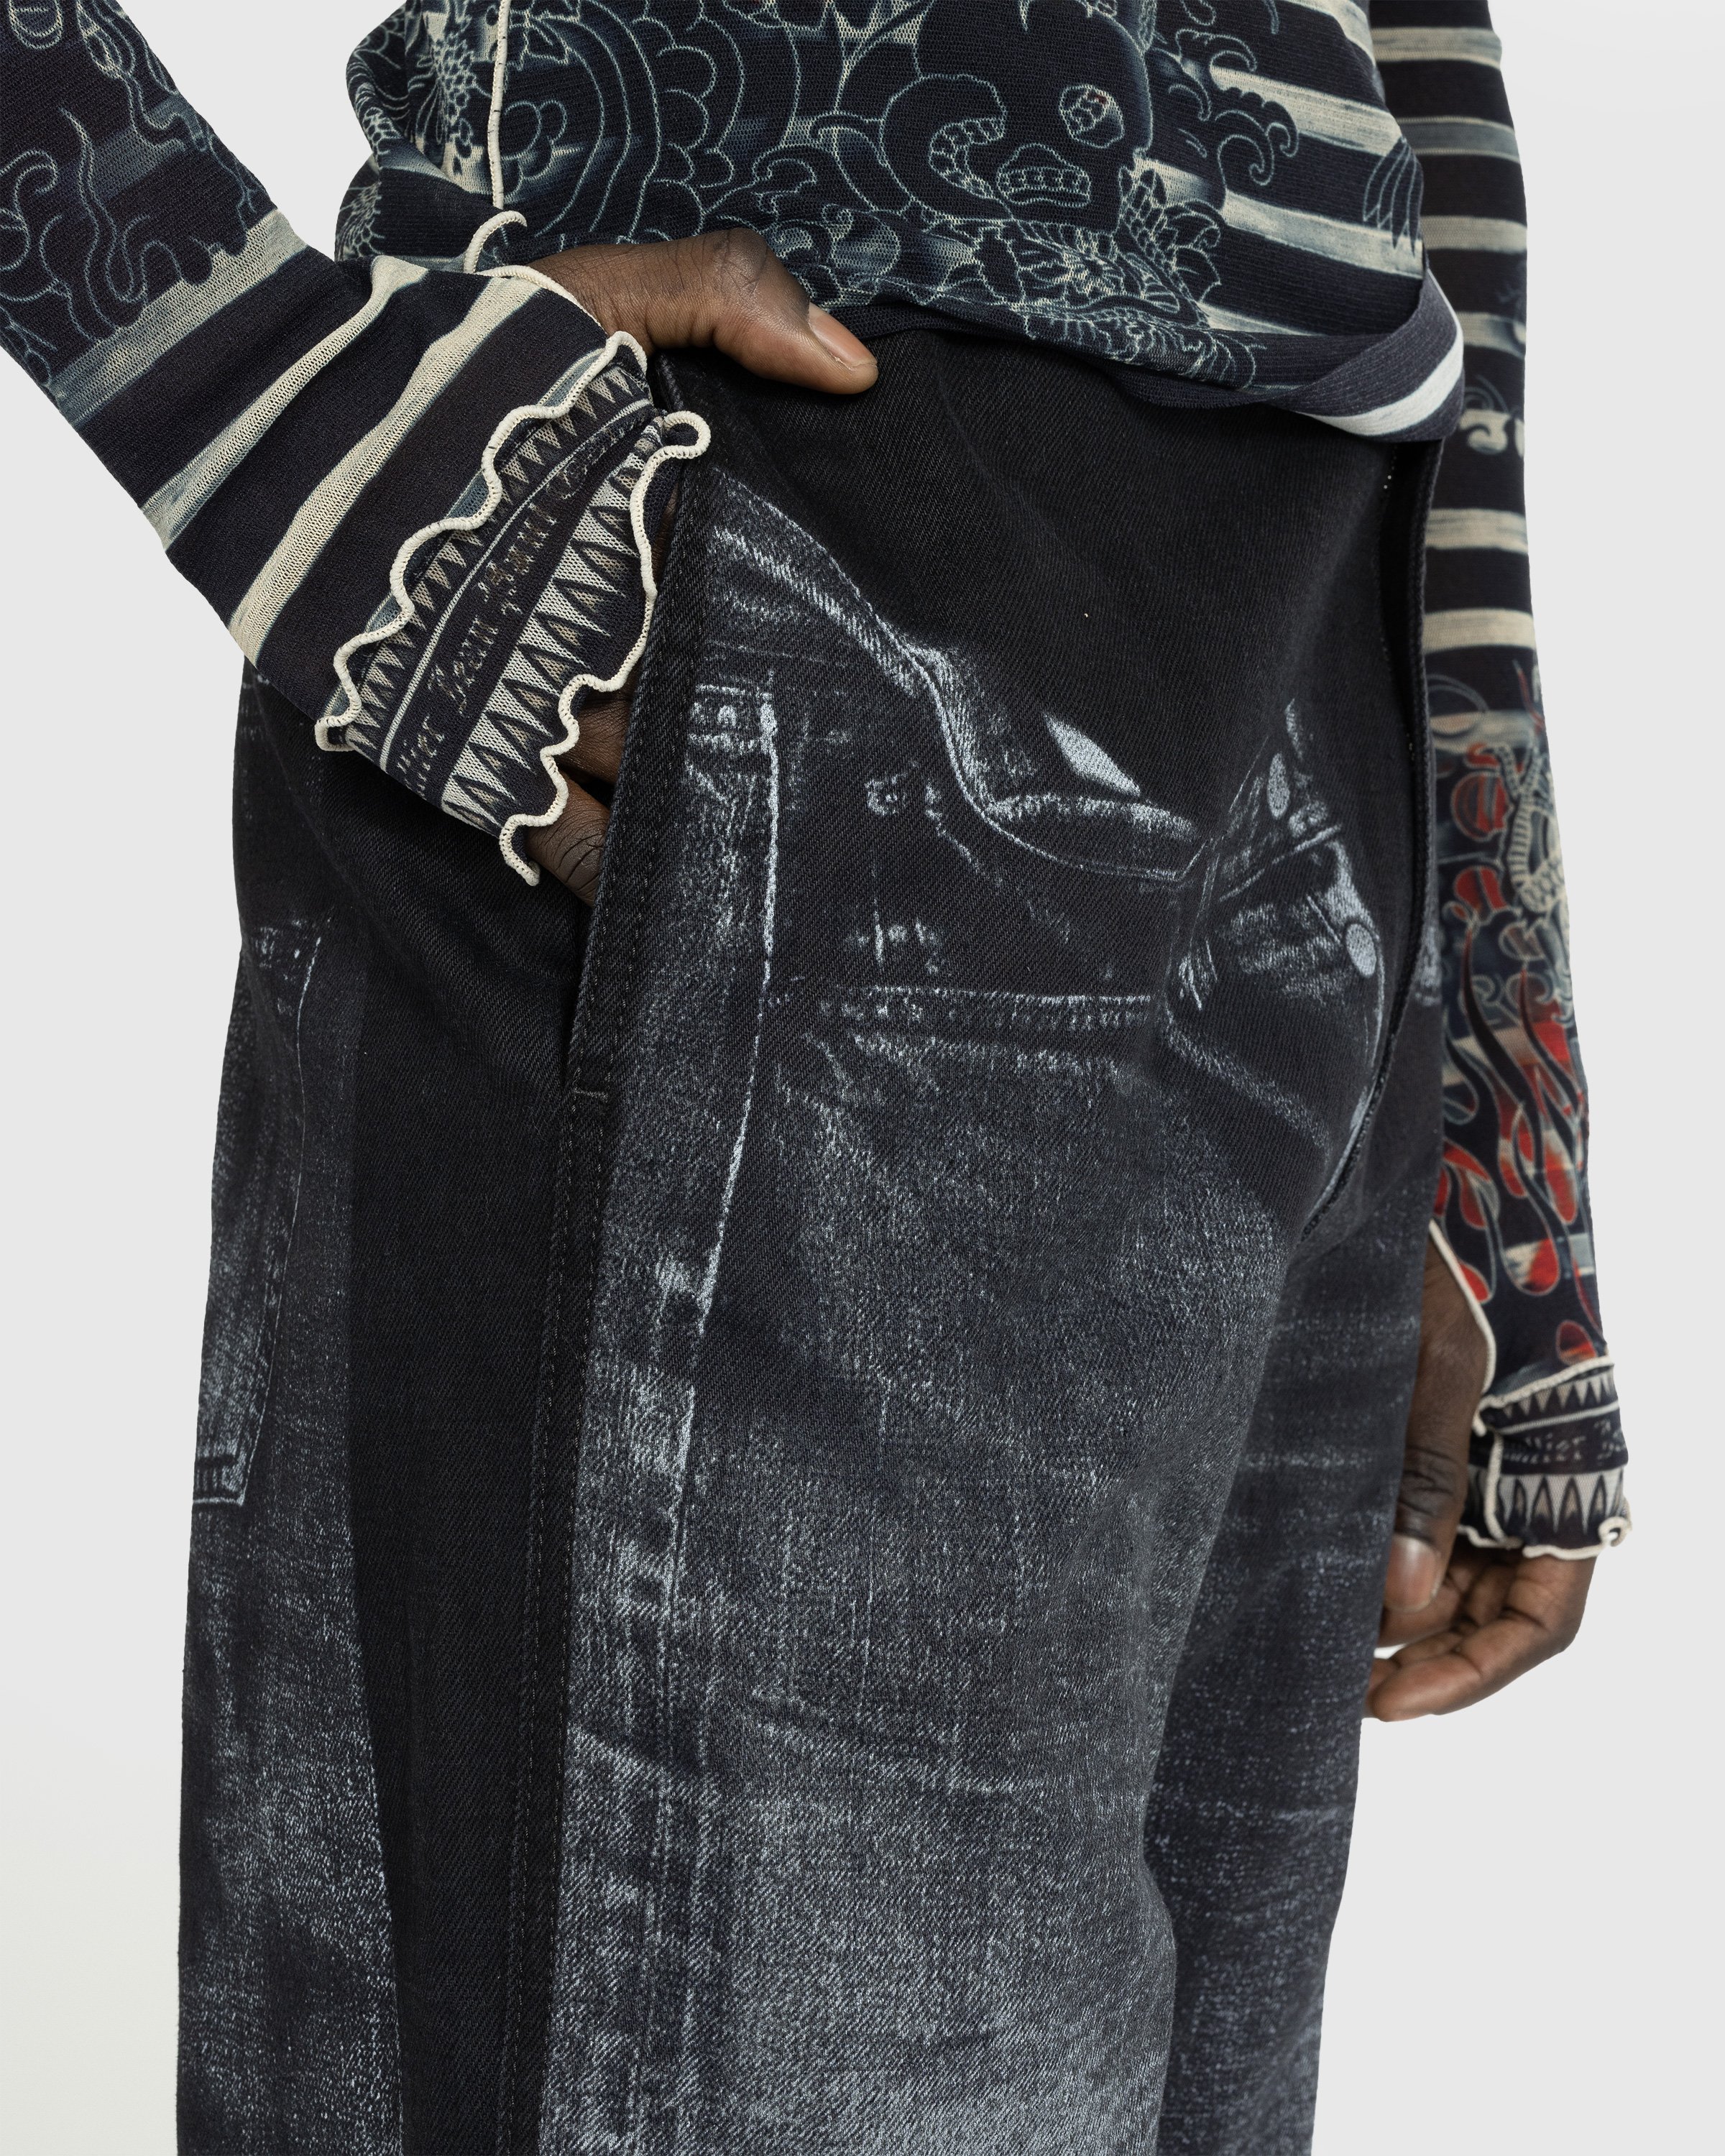 Jean Paul Gaultier - Denim Trompe L'oeil Jeans Black/Gray - Clothing - Black - Image 7